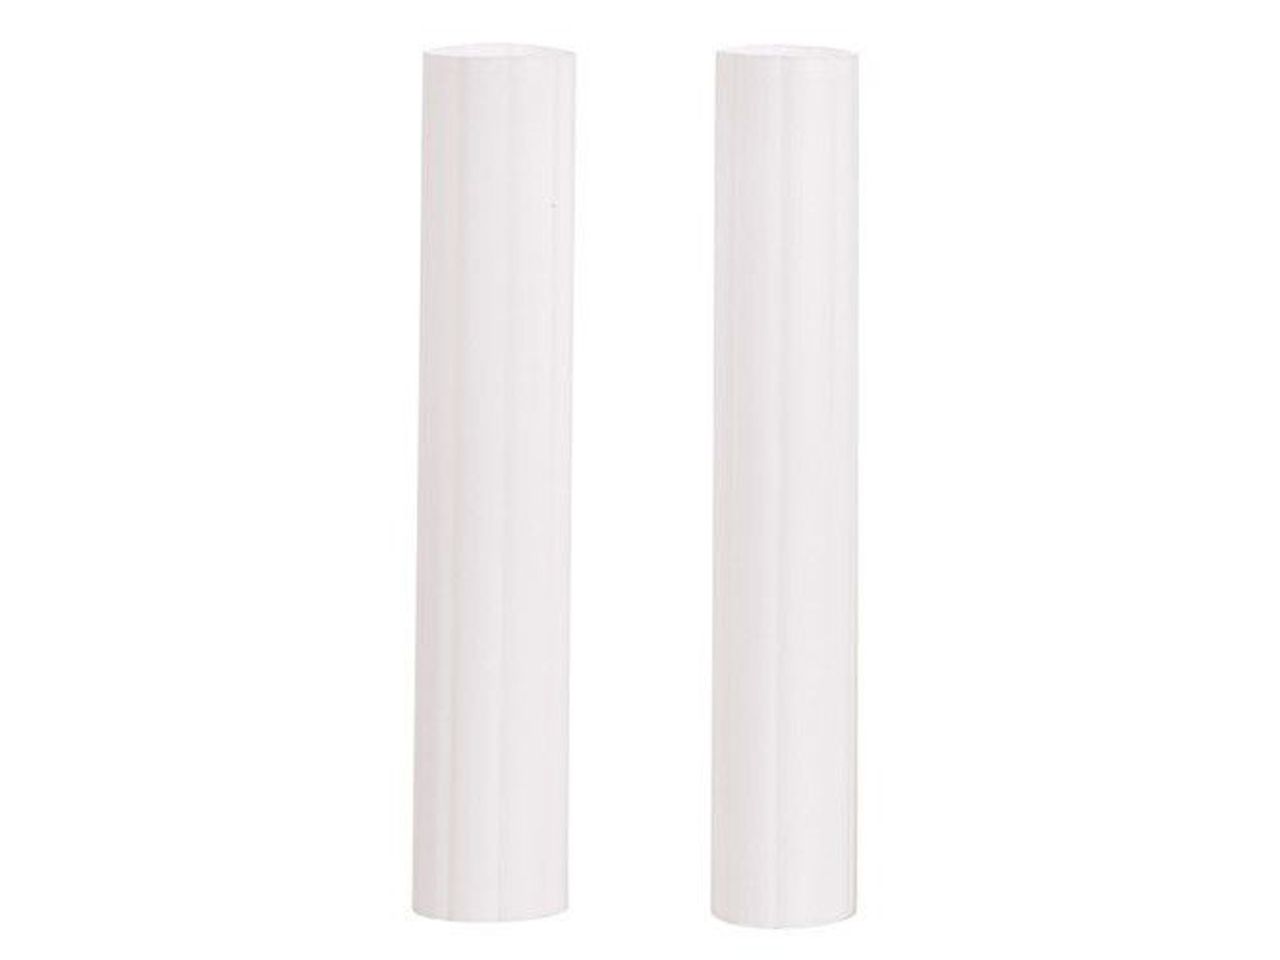 Tortendübel: Hidden Pillars, Kunststoff, Weiß, 4 Stück à 15,2 cm